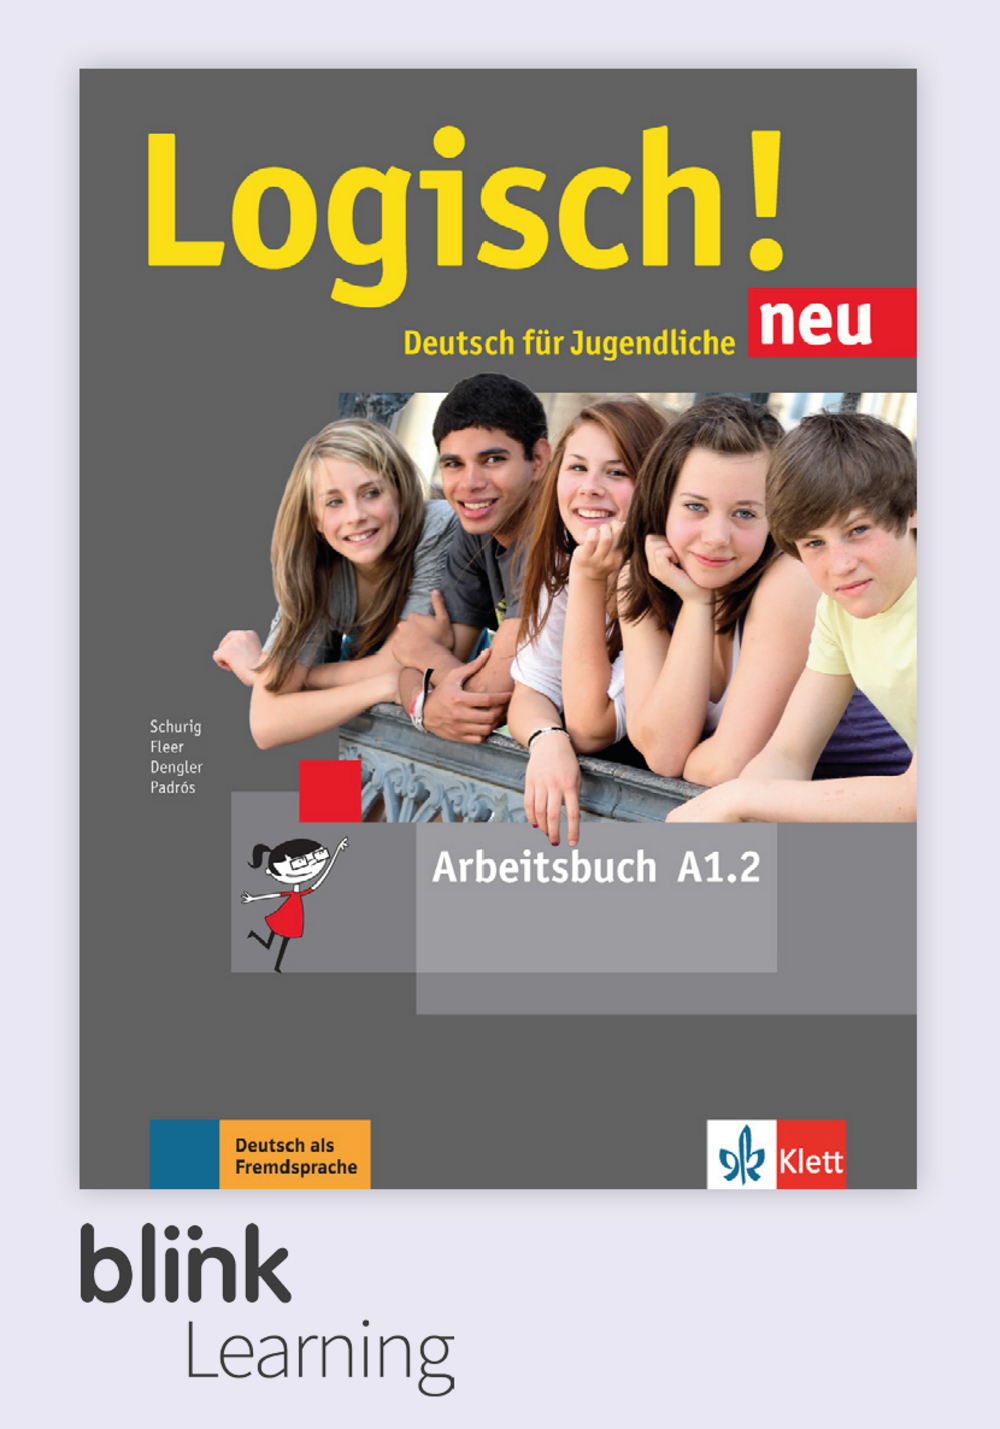 Logisch! neu A1.2 Digital Arbeitsbuch fur Lernende / Цифровая рабочая тетрадь для ученика